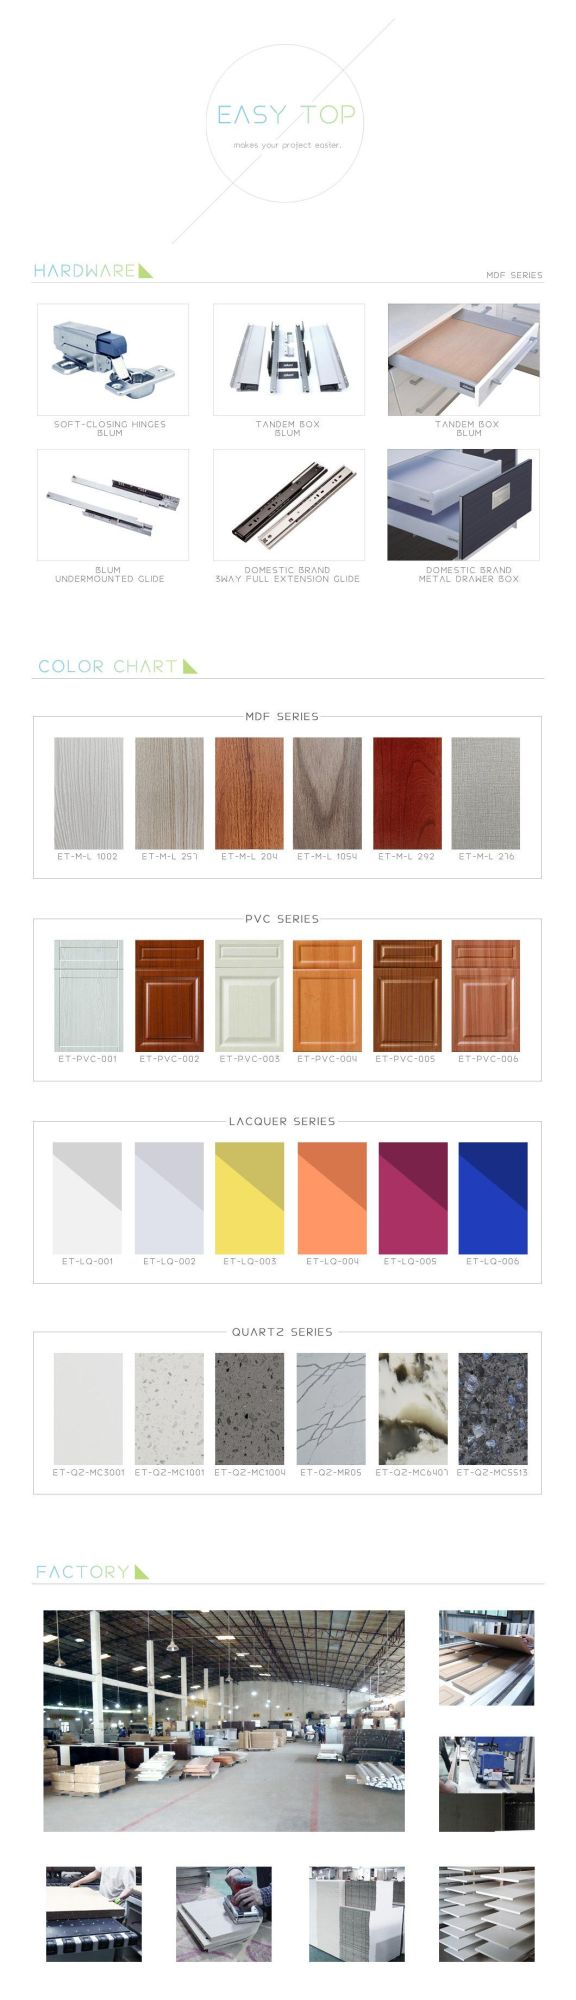 Custom Design Wooden Vaneer Kitchen Wall Cabinets Island Style Cupboard Guangzhou